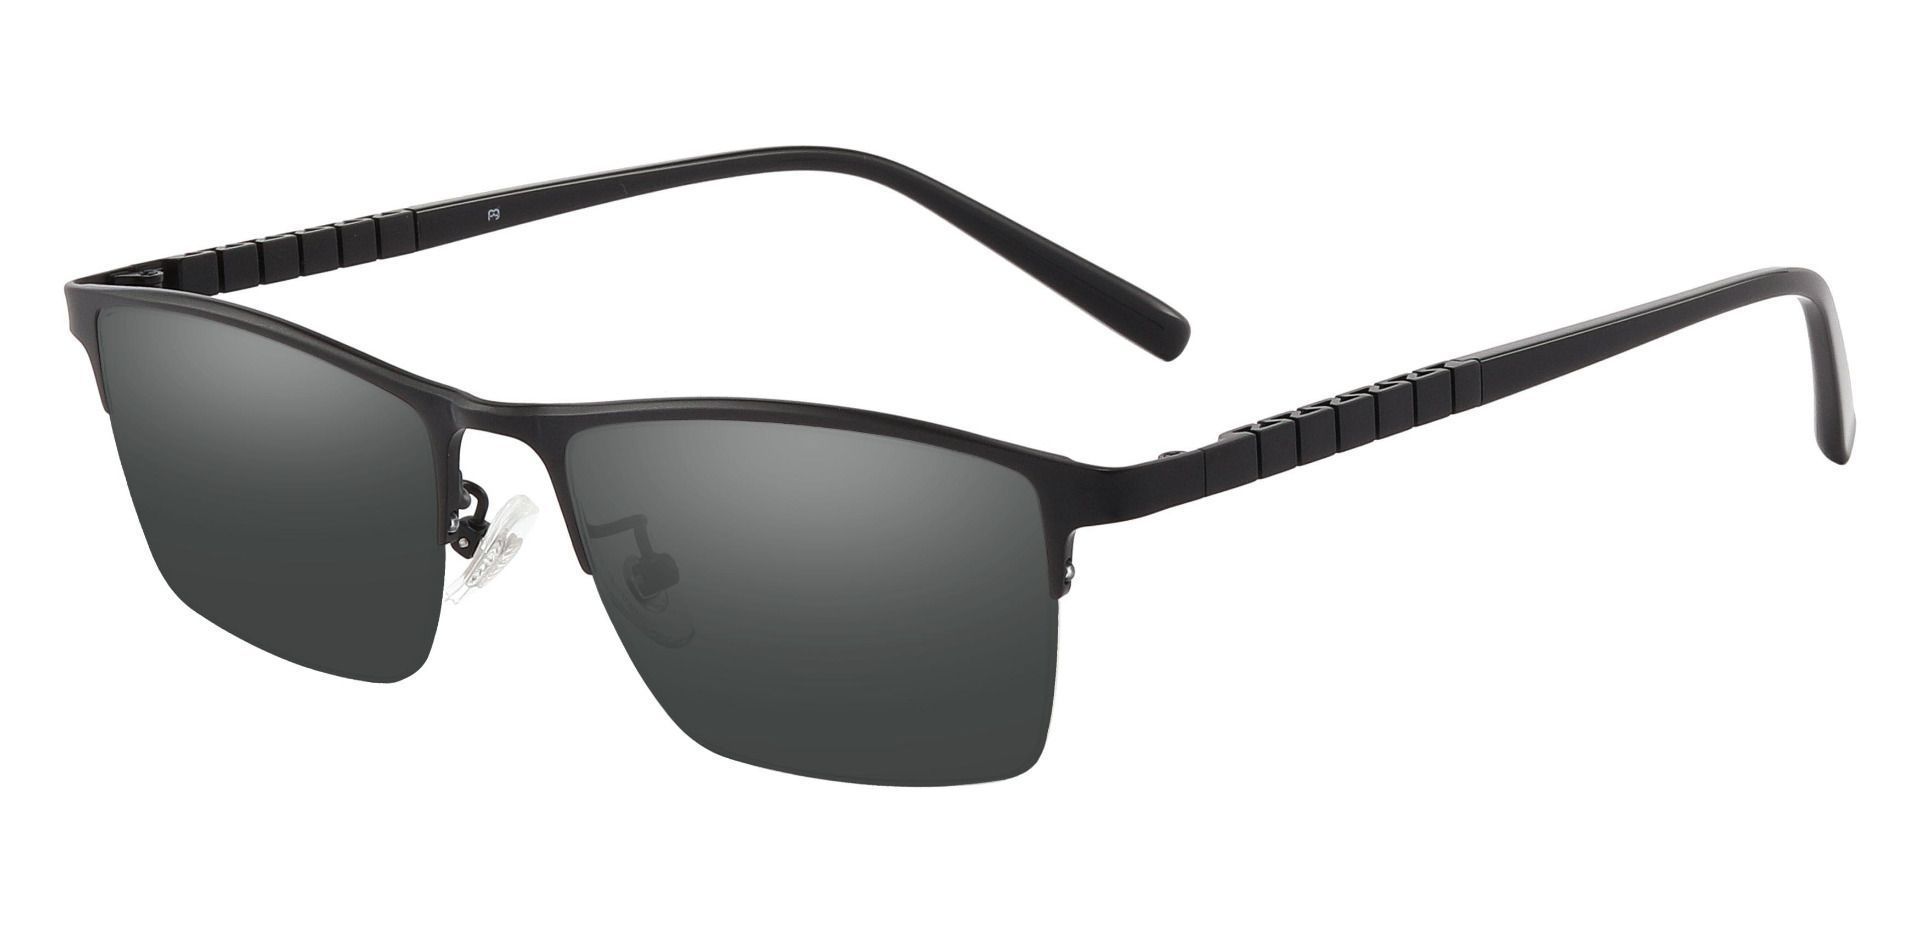 Maine Rectangle Progressive Sunglasses - Black Frame With Gray Lenses